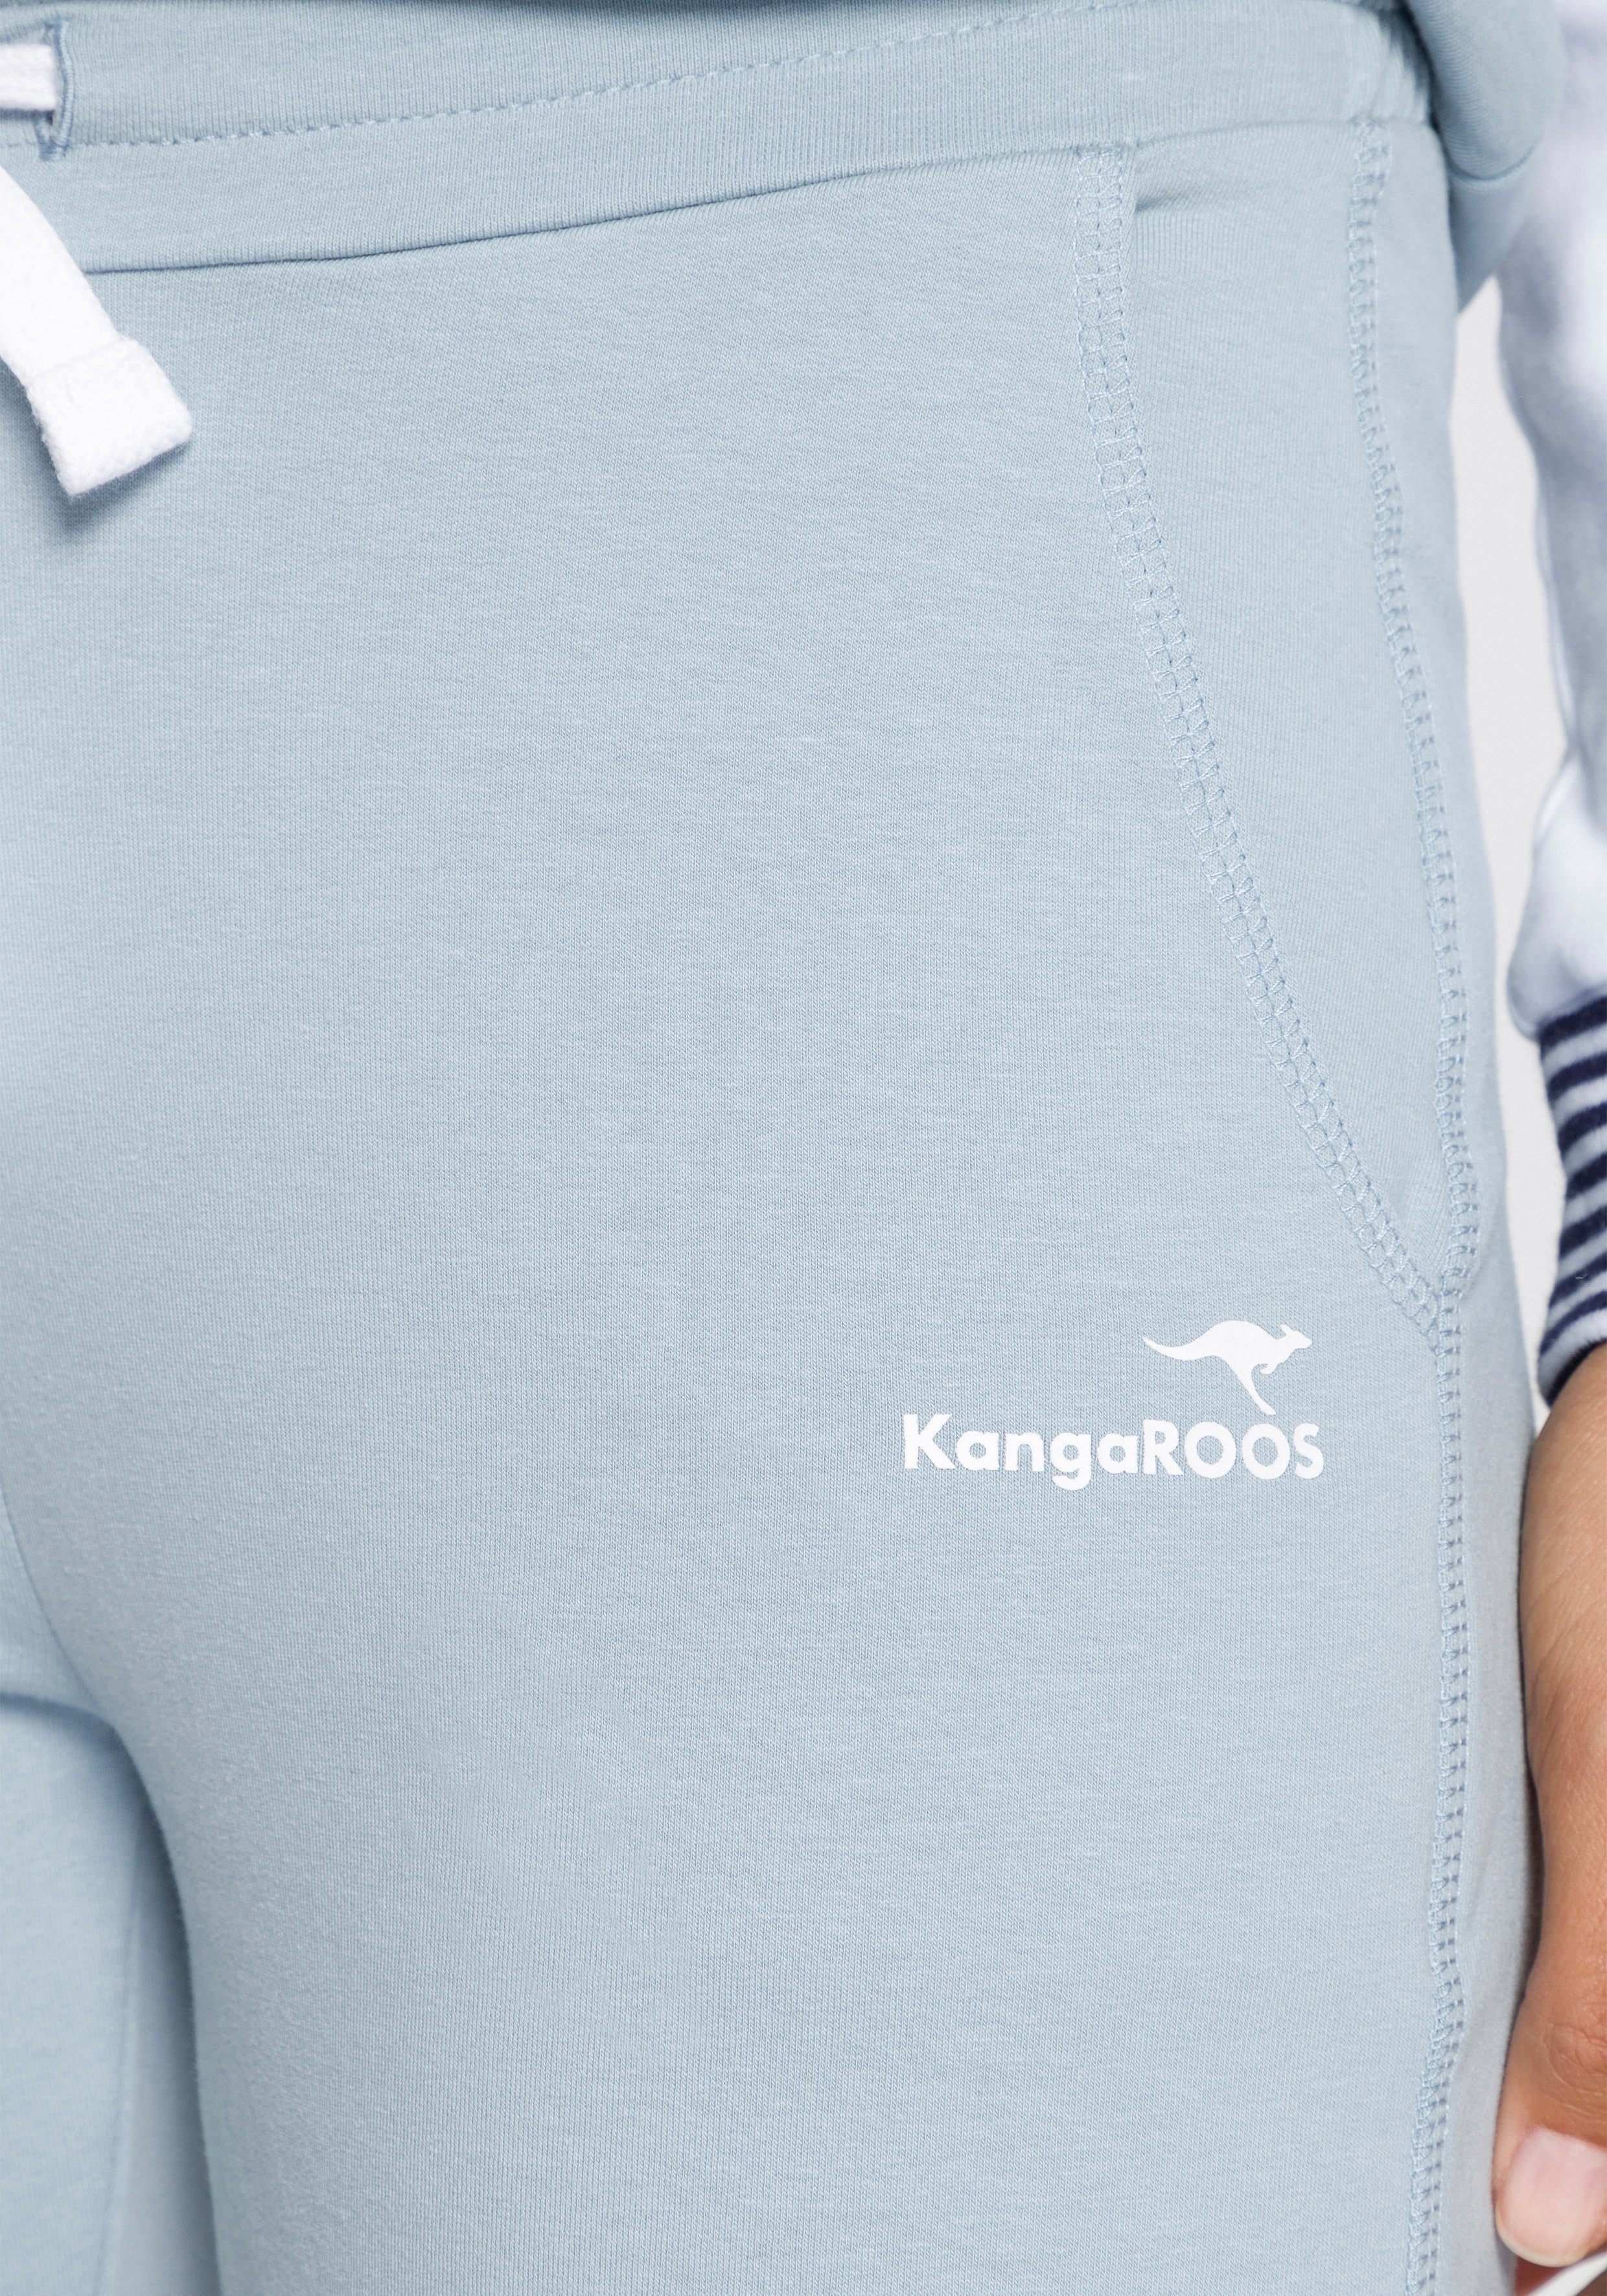 mit KangaROOS graublau in Logo-Druck 7/8-Länge Jogginghose